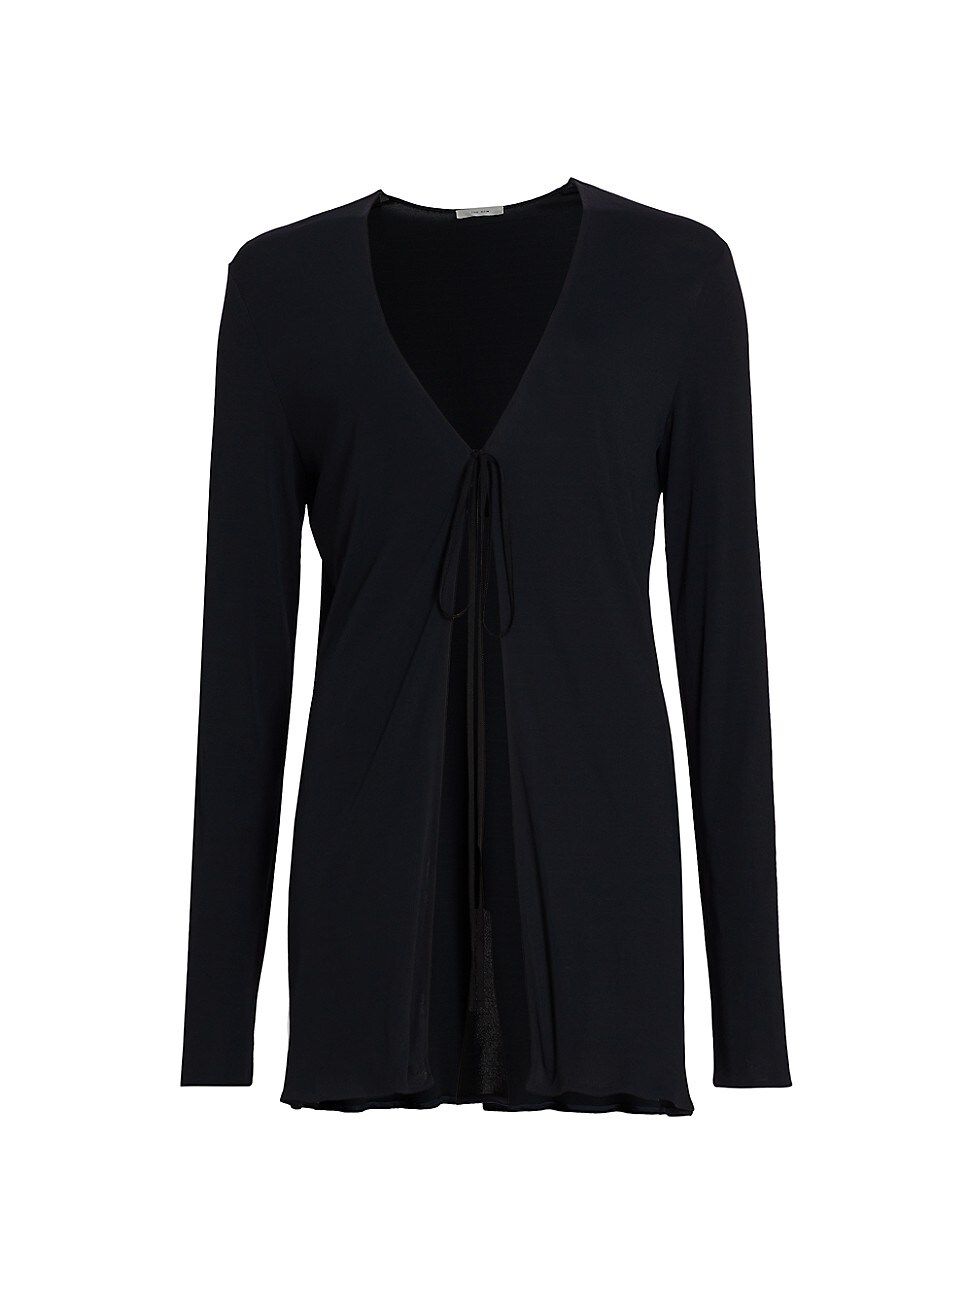 Women's Isara Self-Tie Top - Black - Size XS - Black - Size XS | Saks Fifth Avenue